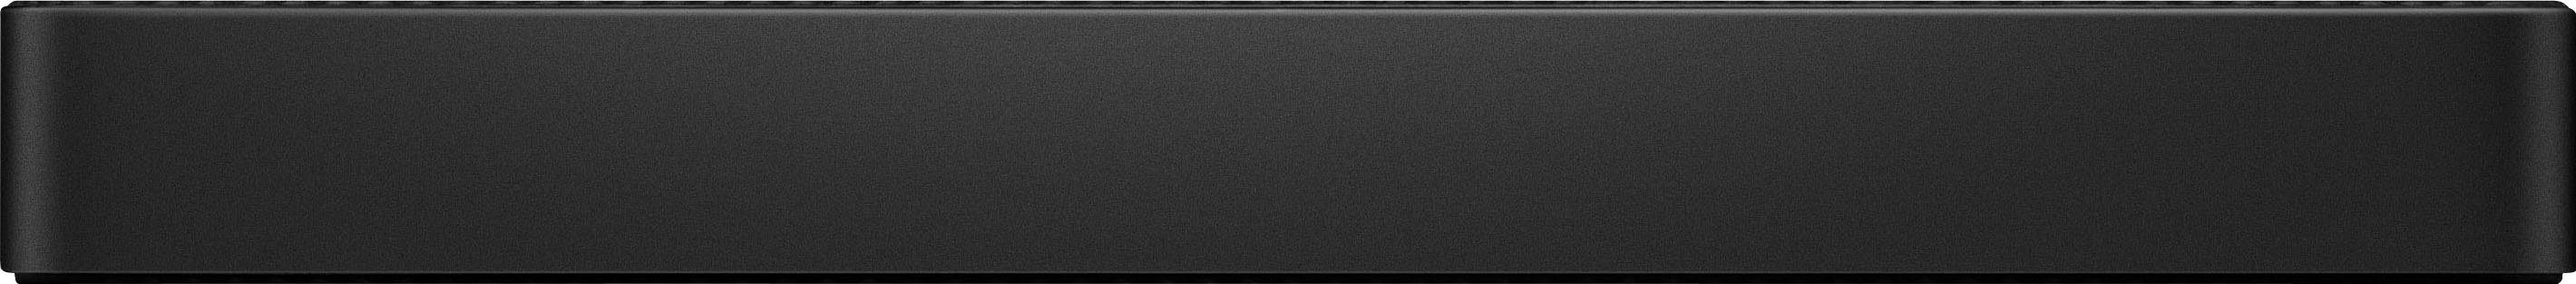 externe 2TB Expansion 2,5" (2 Portable Seagate TB) HDD-Festplatte